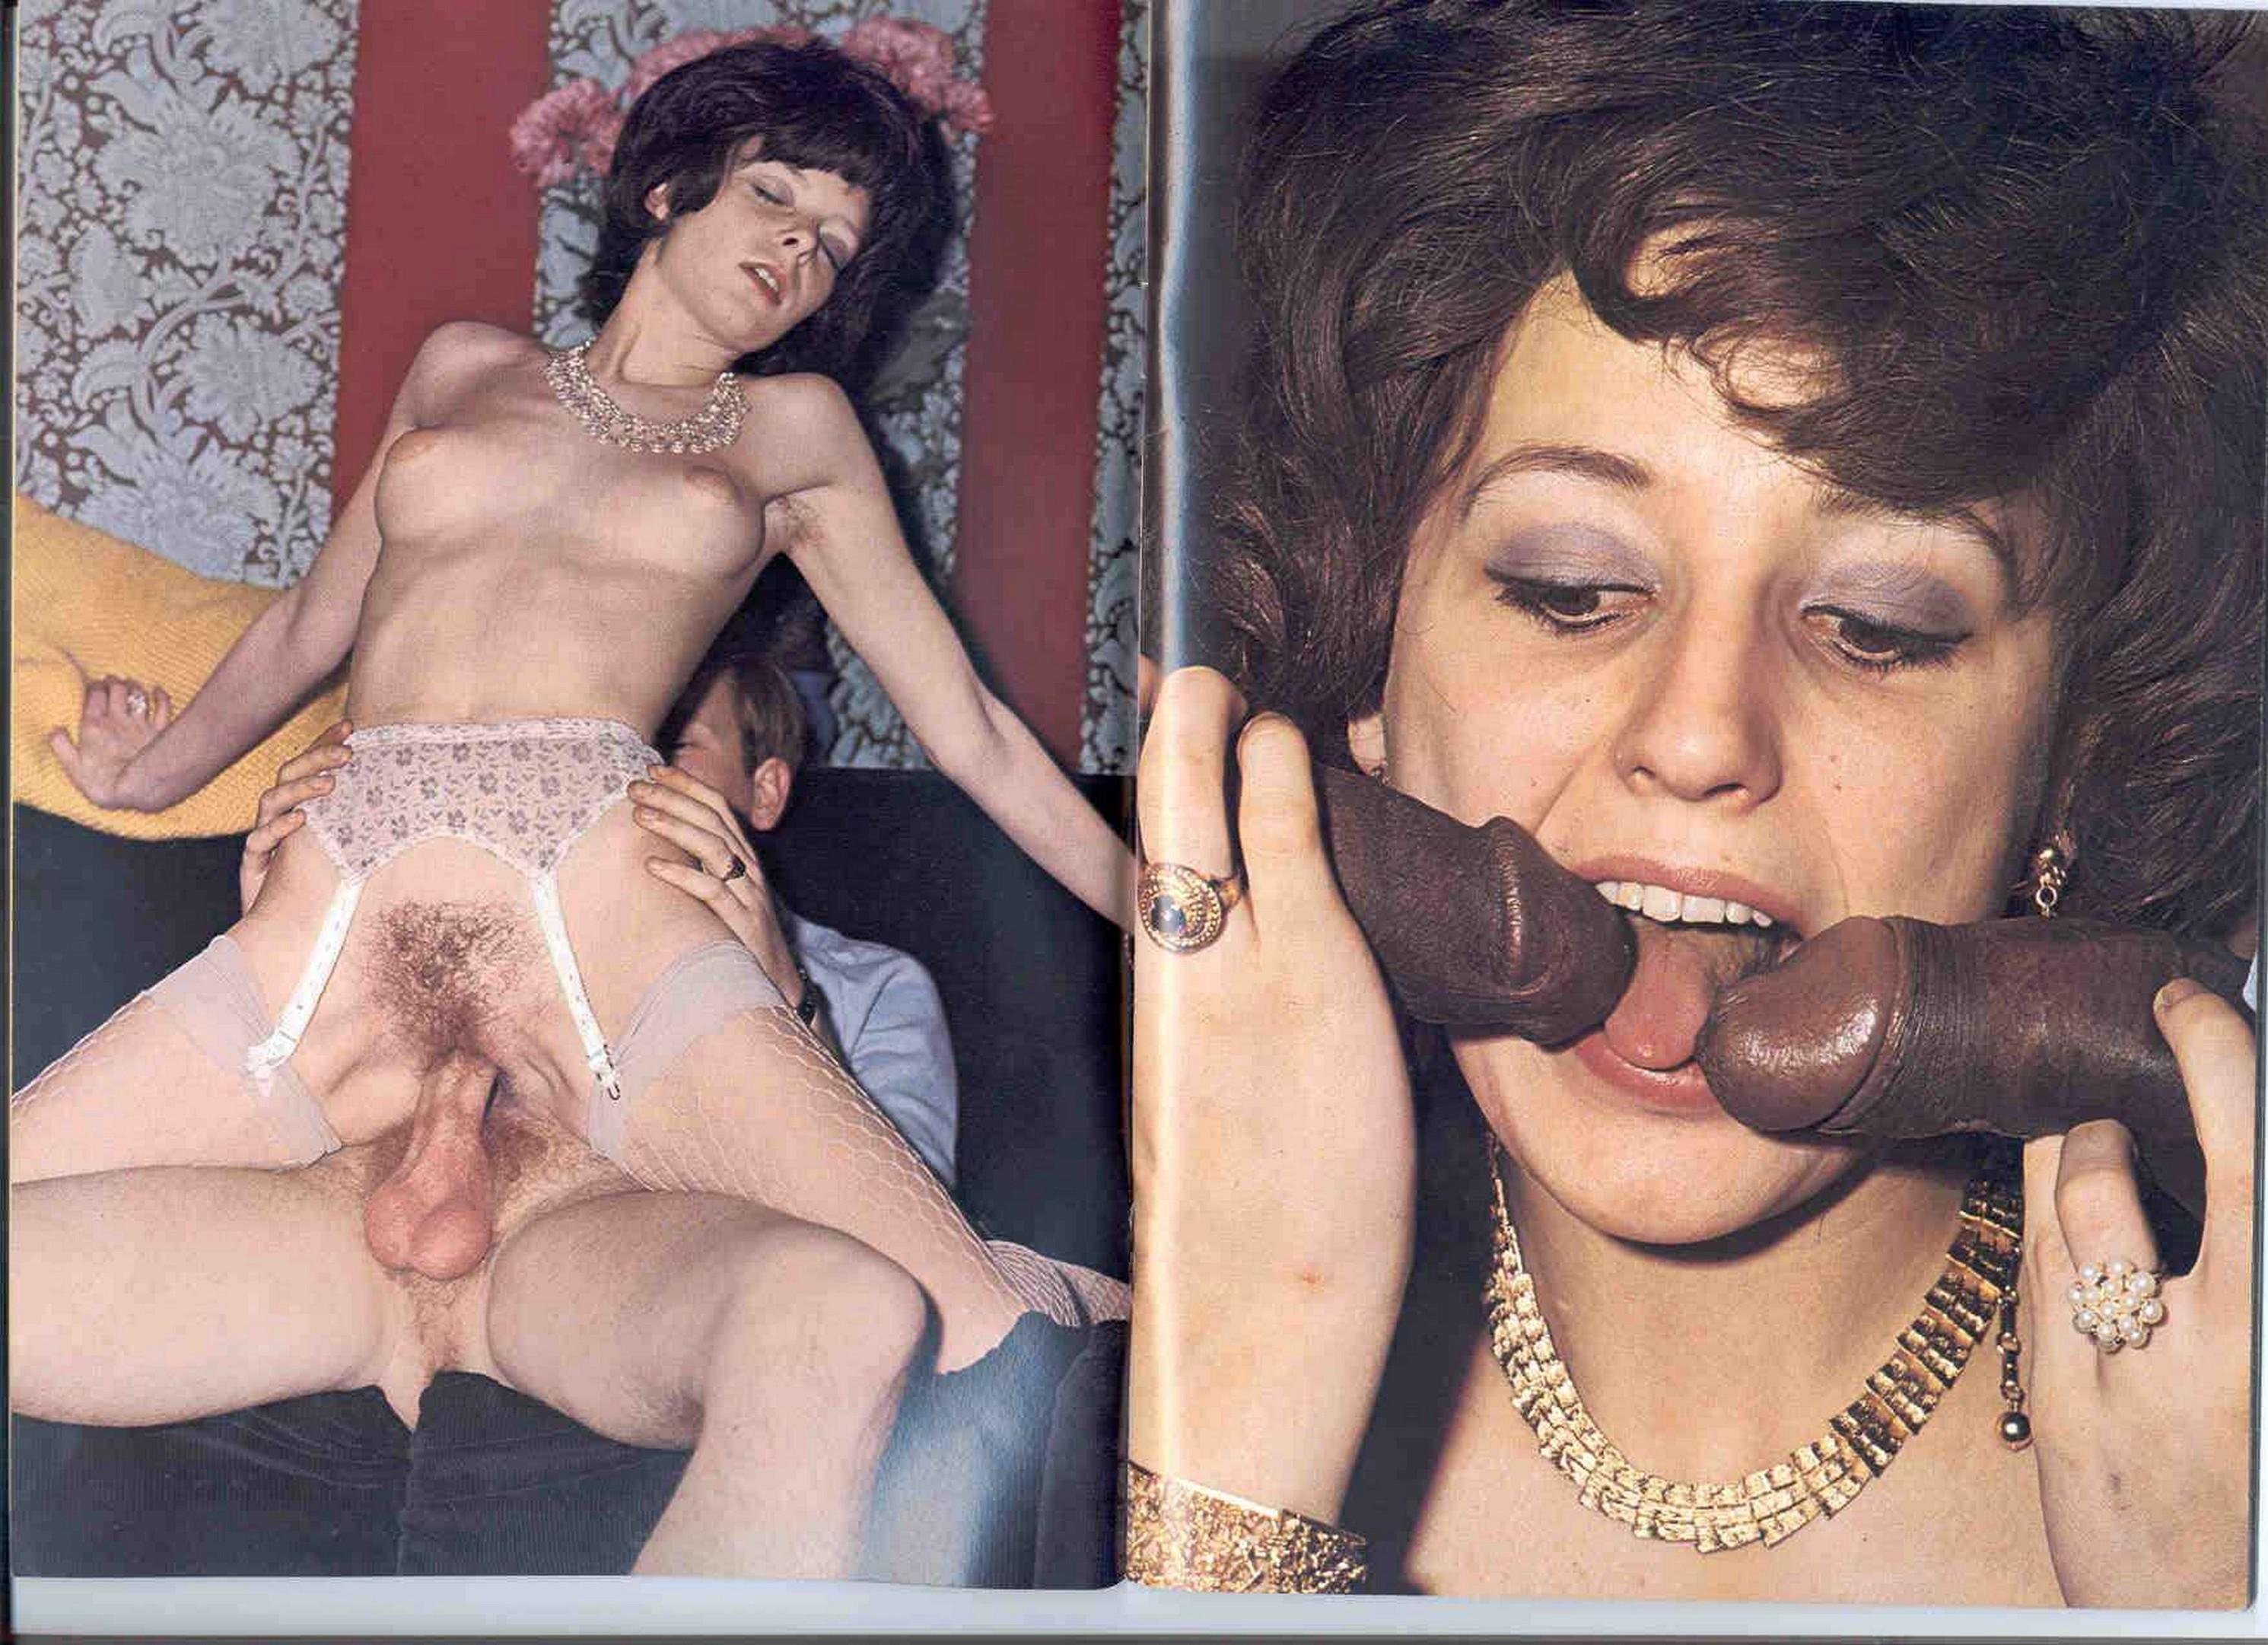 Free Images Of Vintage Porn Magazine Порно Видео | altaifish.ru